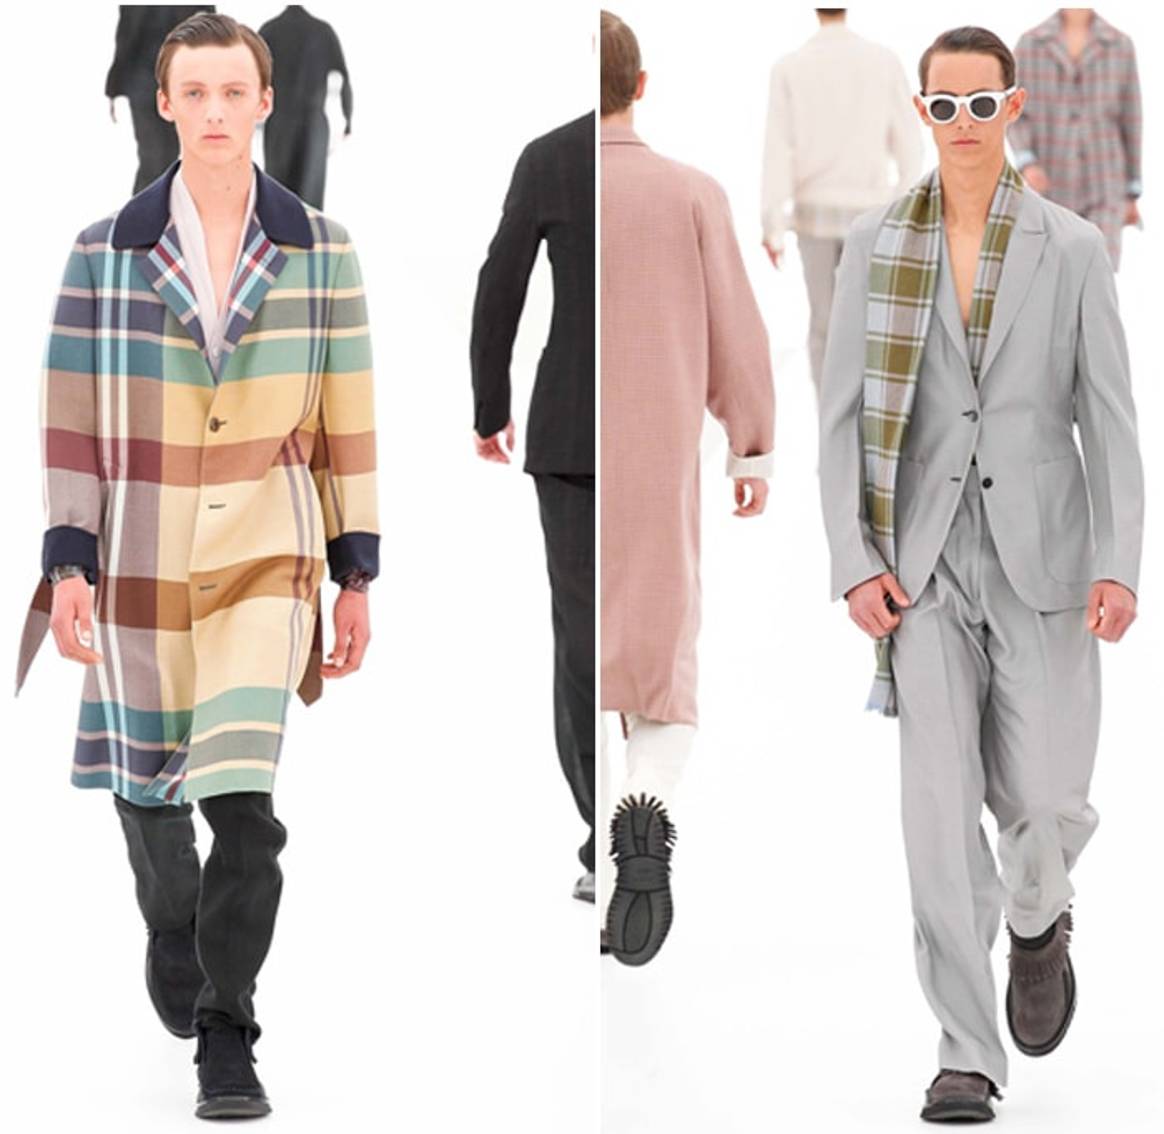 Transparencias e inspiración oriental en la Semana de la Moda masculina de Milán